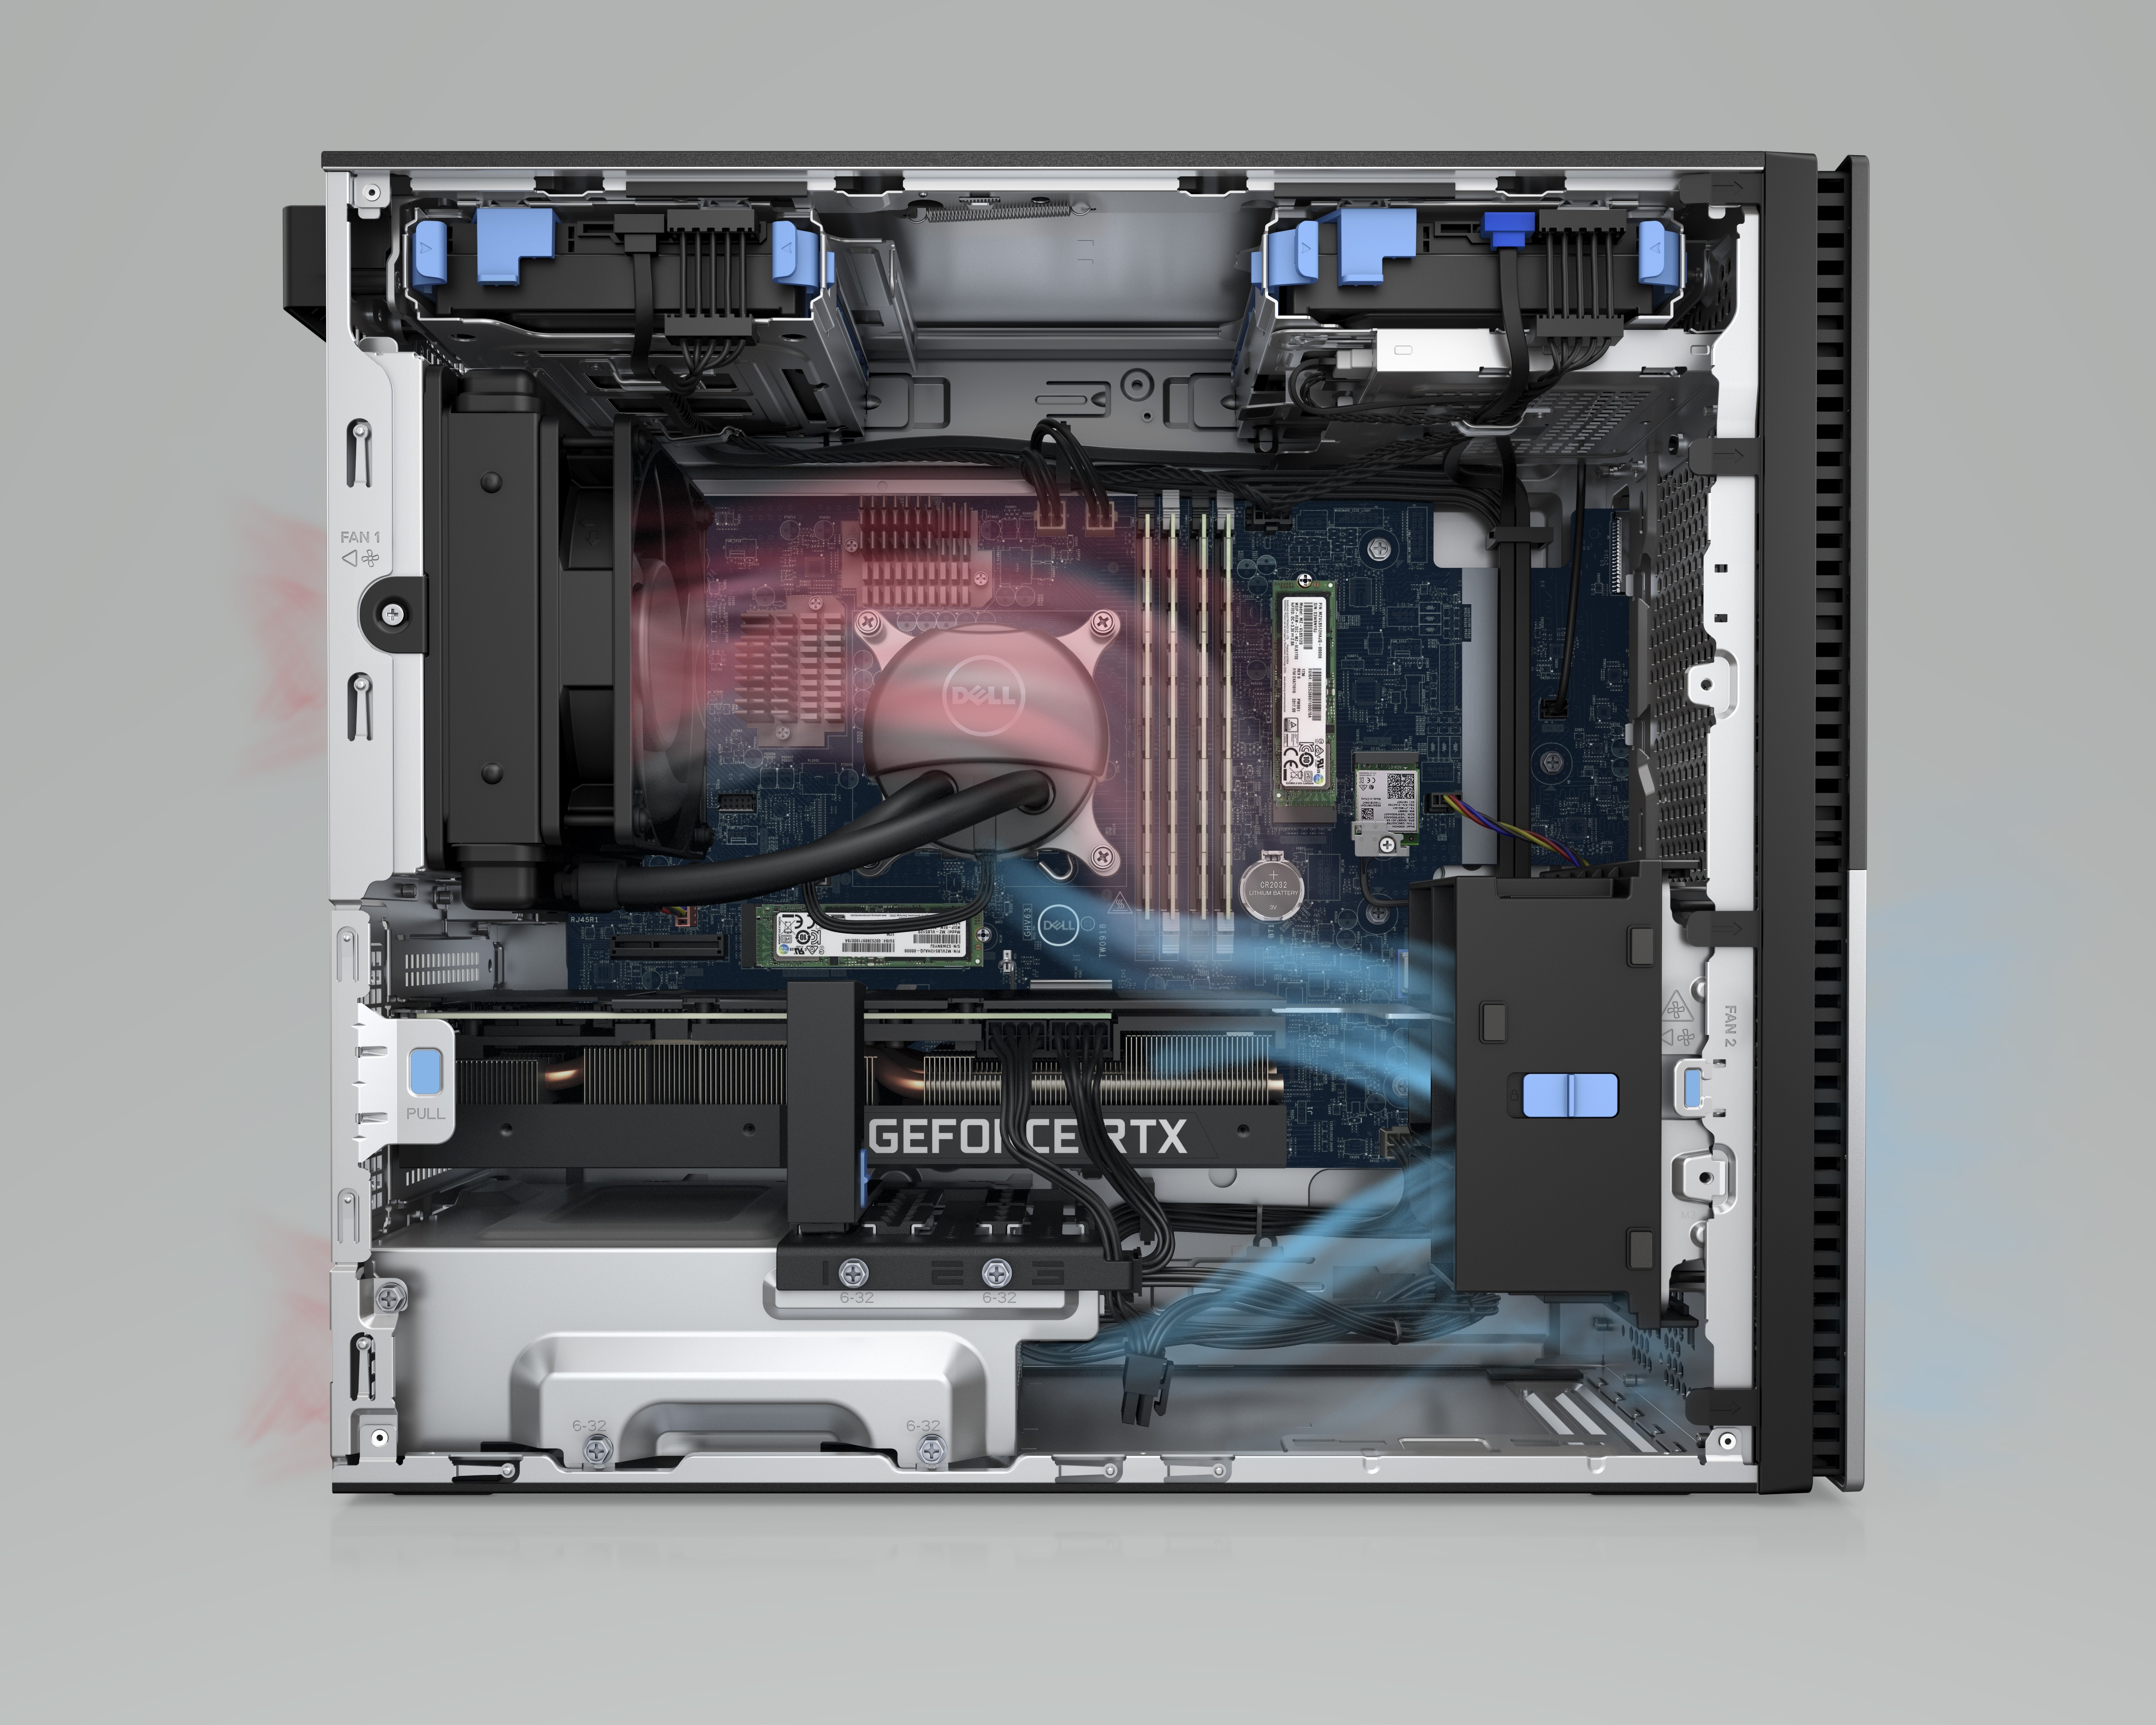 Dell's XPS Desktop gets a new look and liquid cooling | Ars Technica